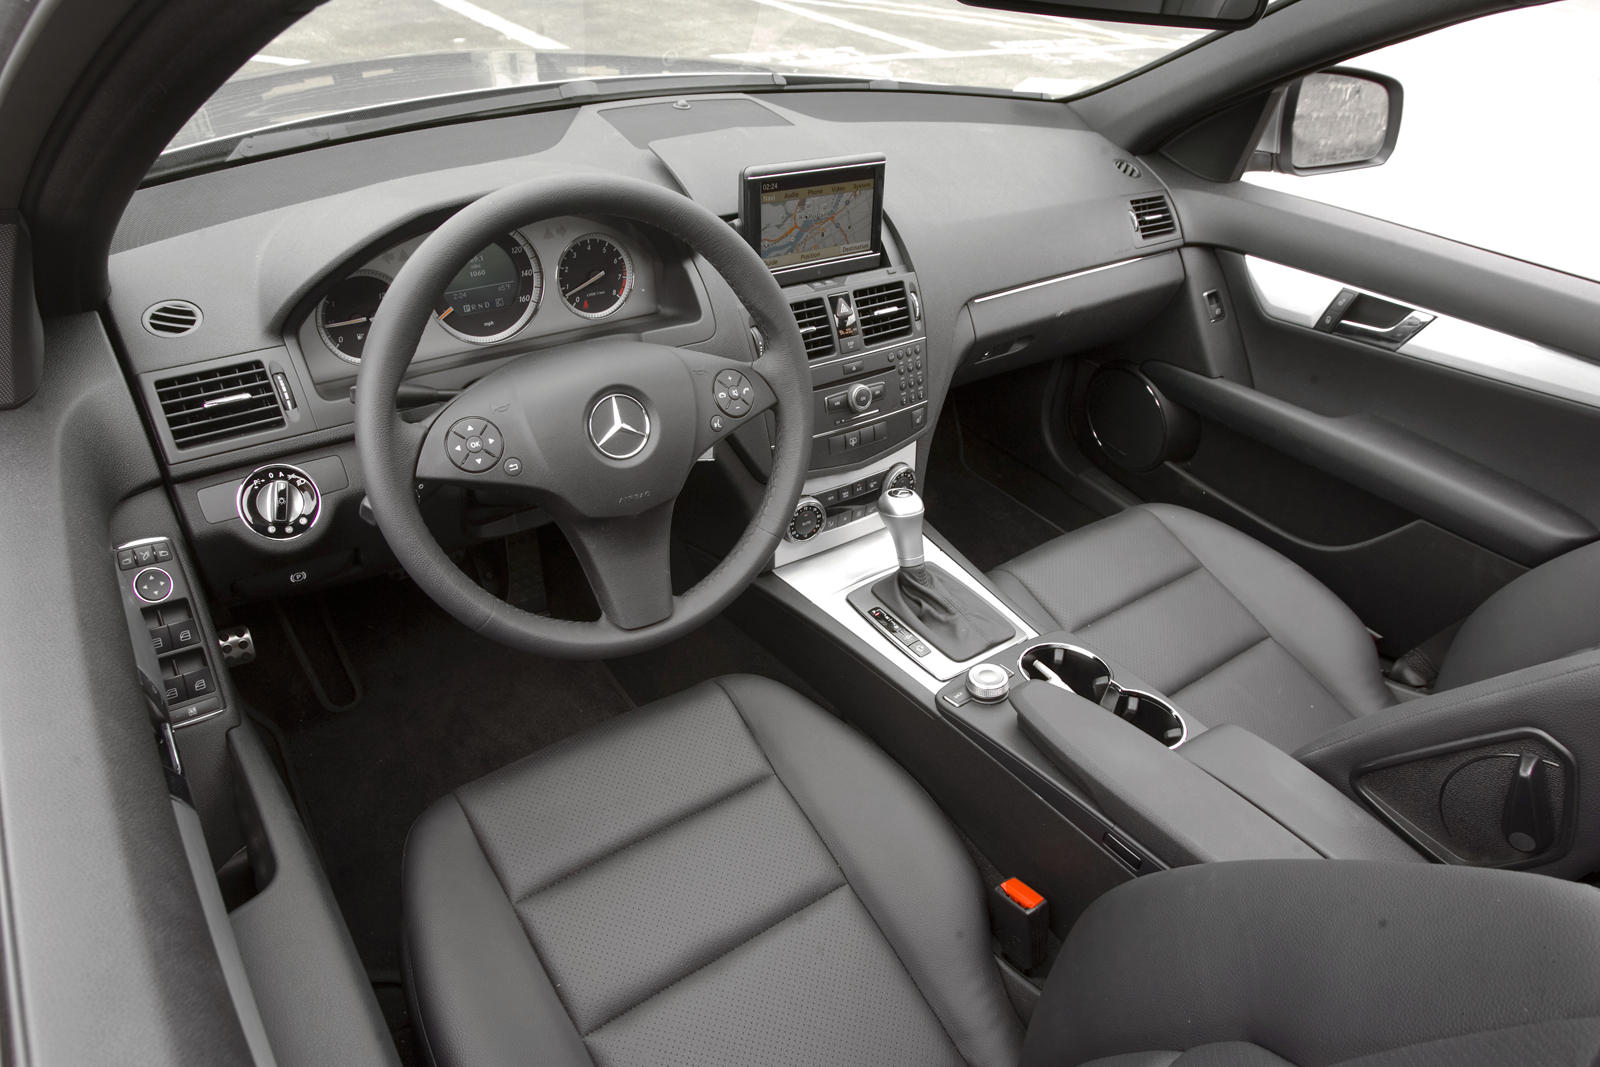 2011 Mercedes-Benz C-Class Sedan Dashboard